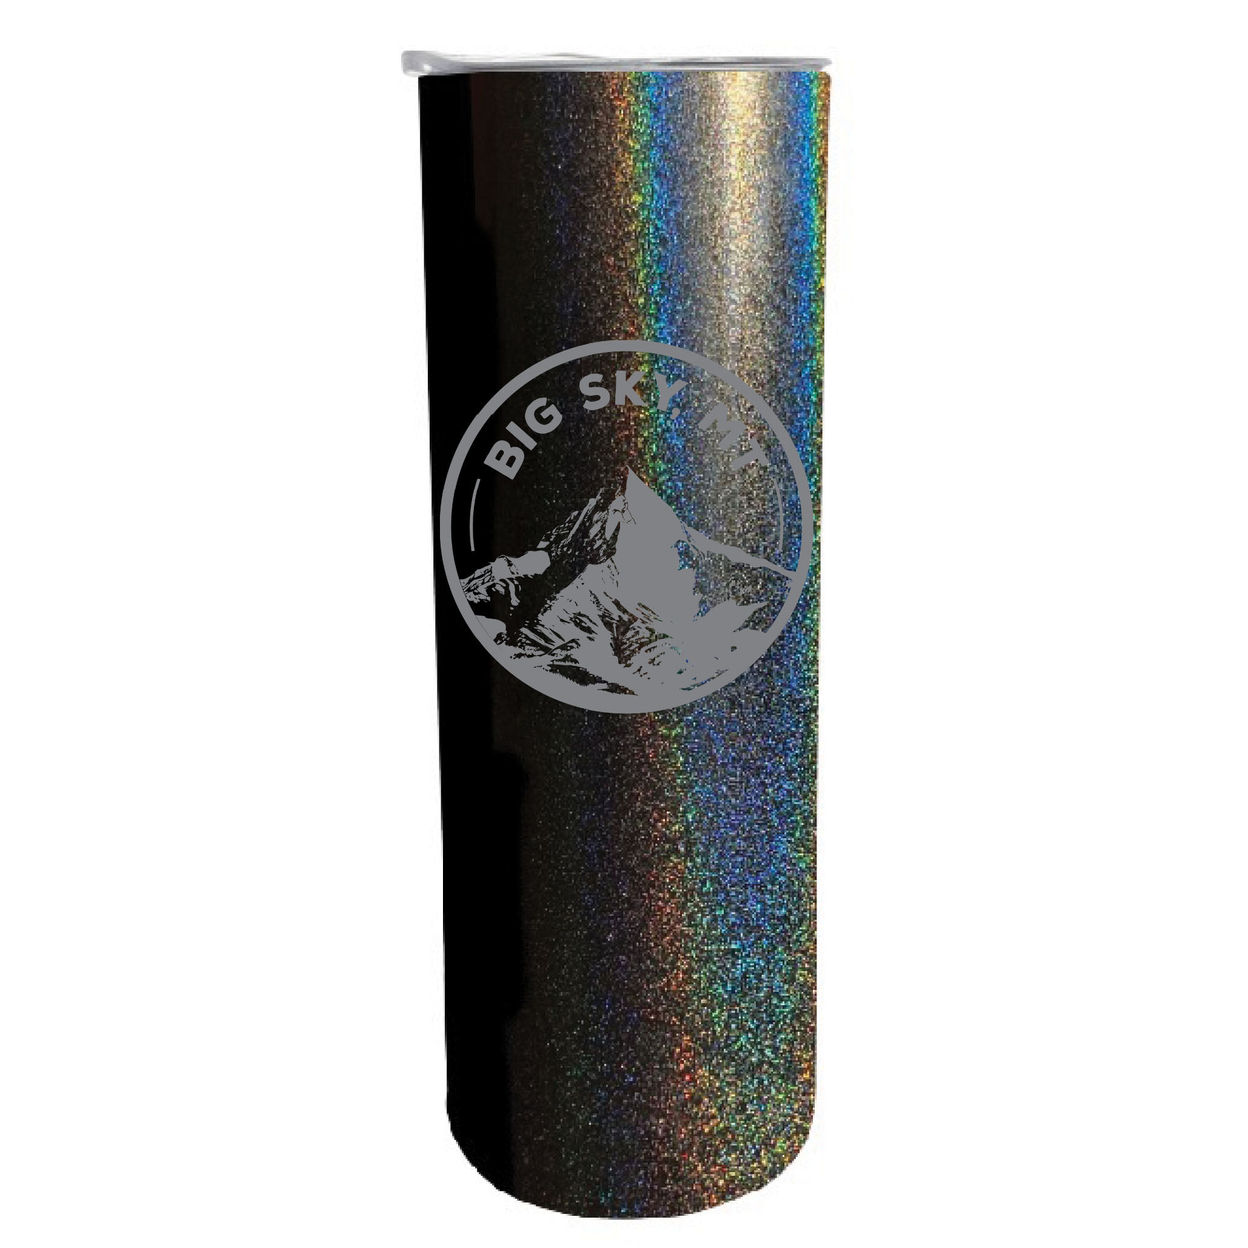 Big Sky Montana Souvenir 20 Oz Engraved Insulated Stainless Steel Skinny Tumbler - Black Glitter,,4-Pack